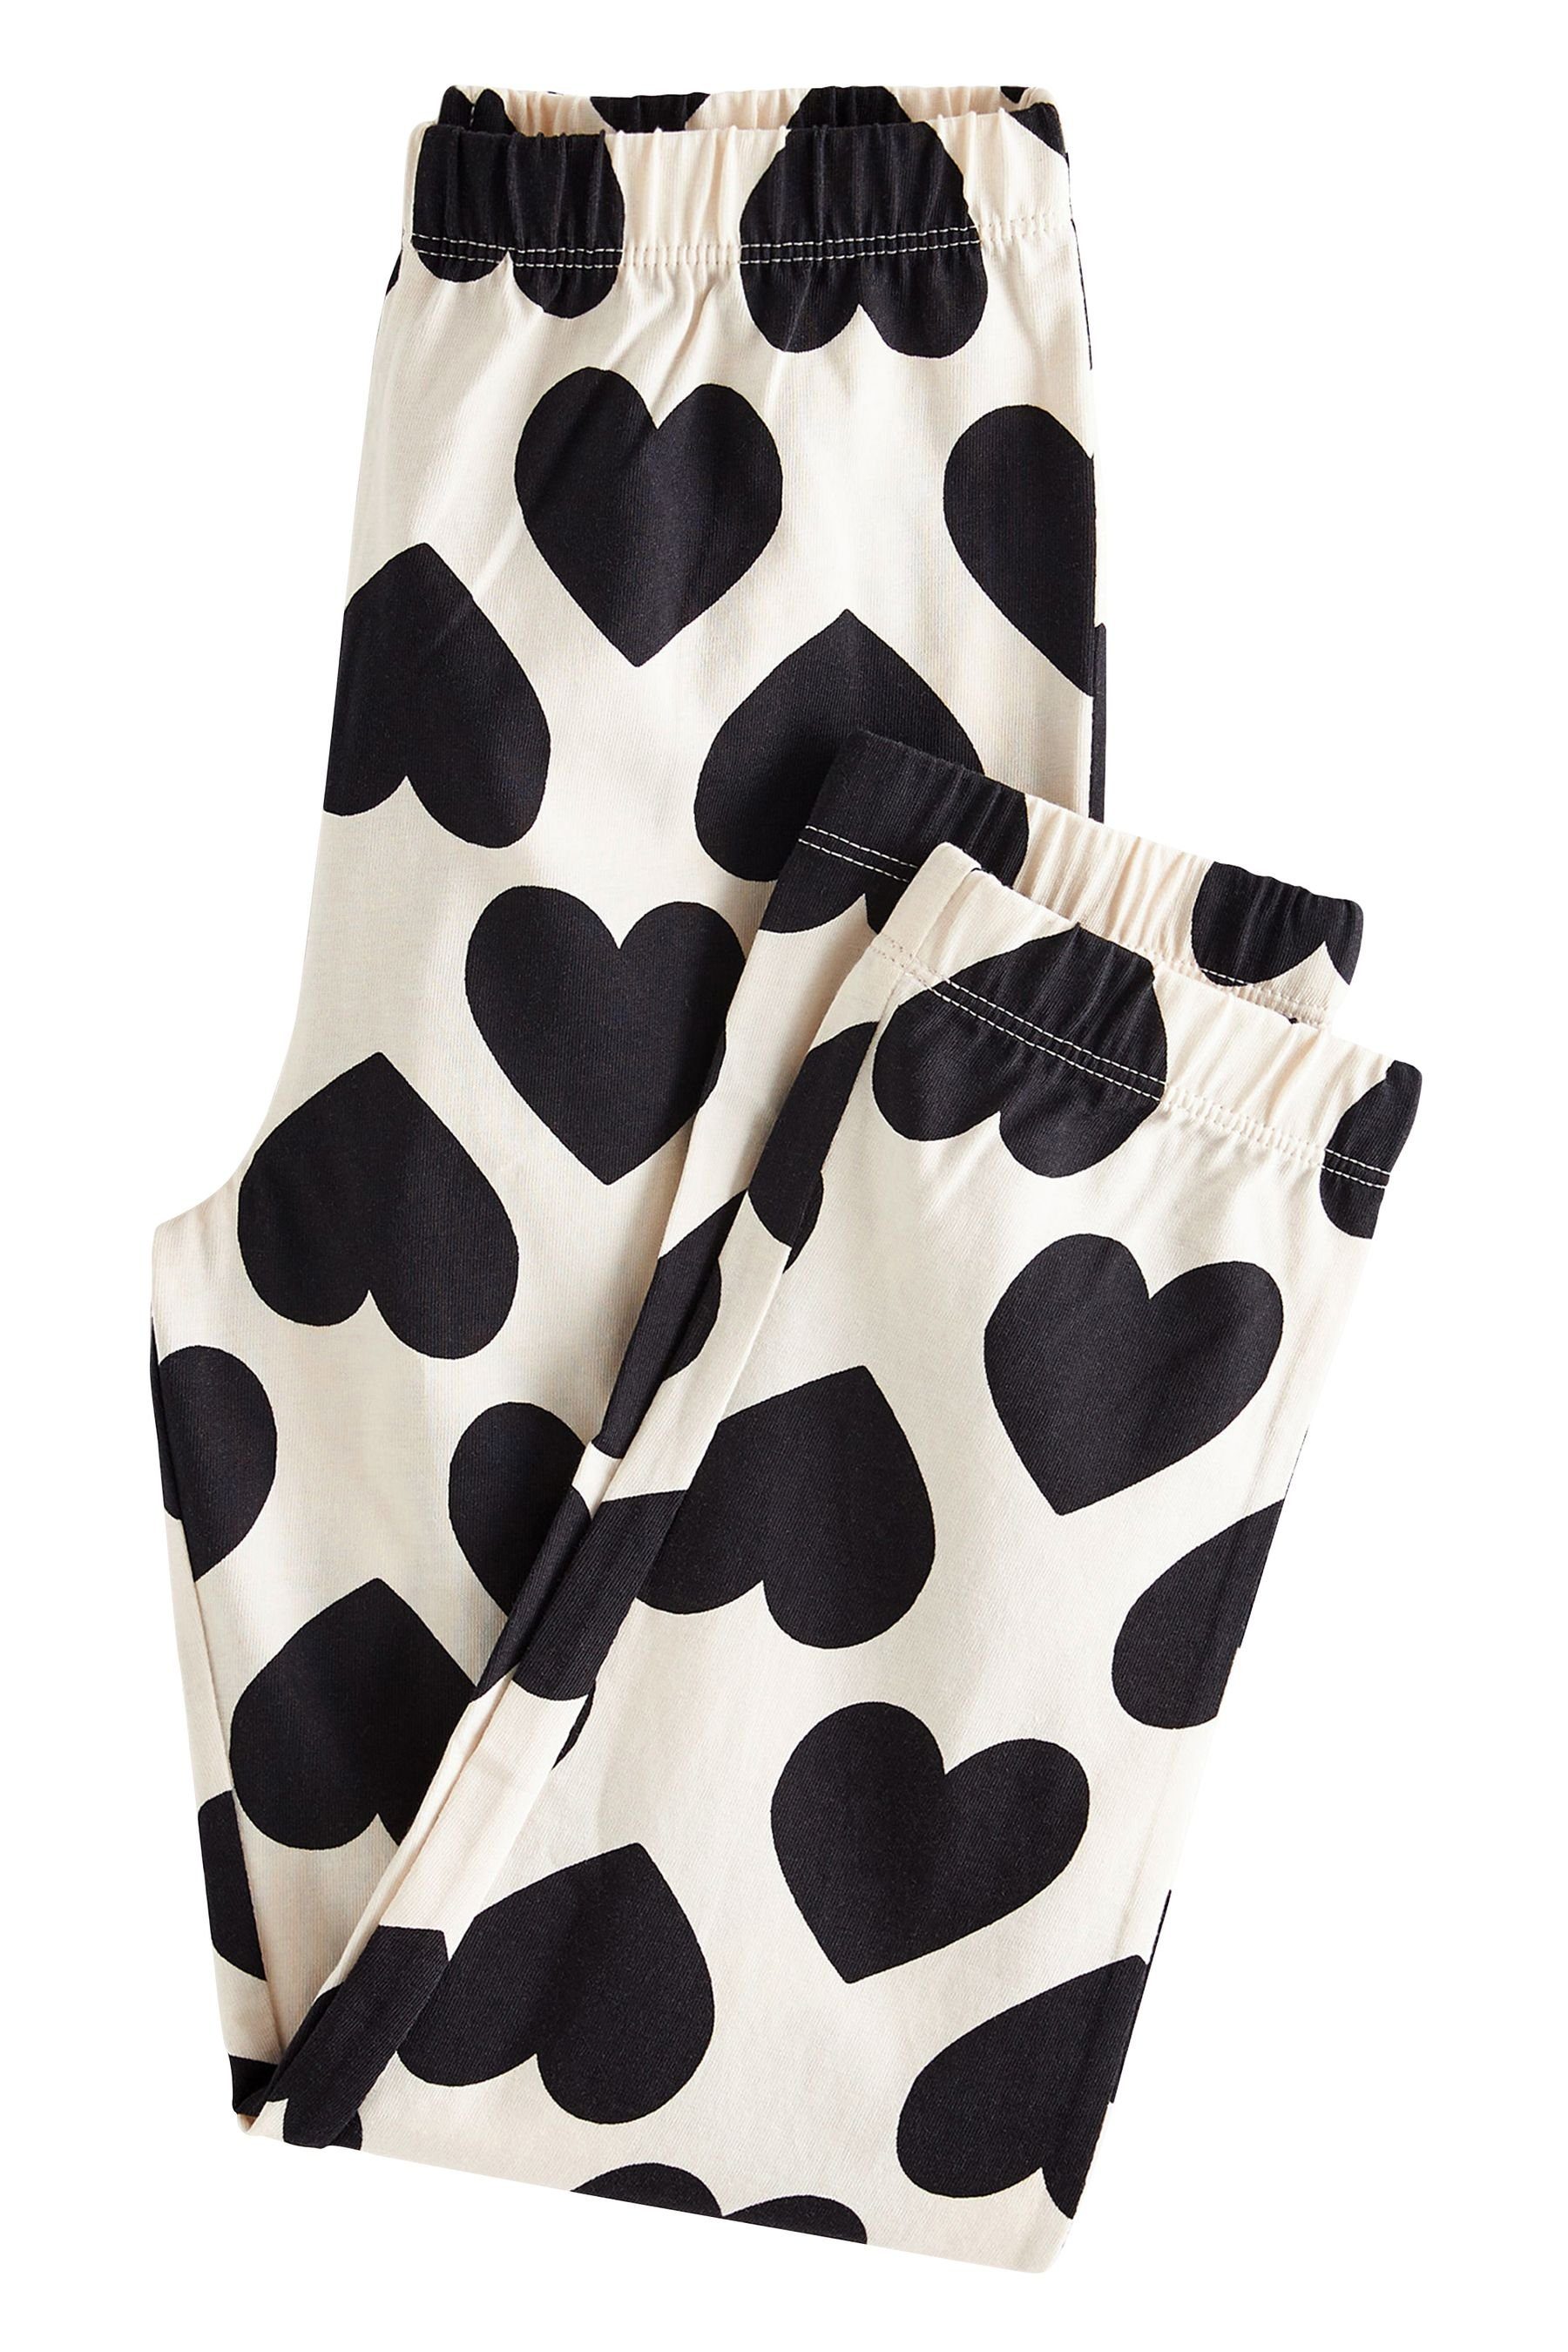 tlg) Pyjama Heart Black/White Next Schlafanzüge Daisy (4 2er-Pack